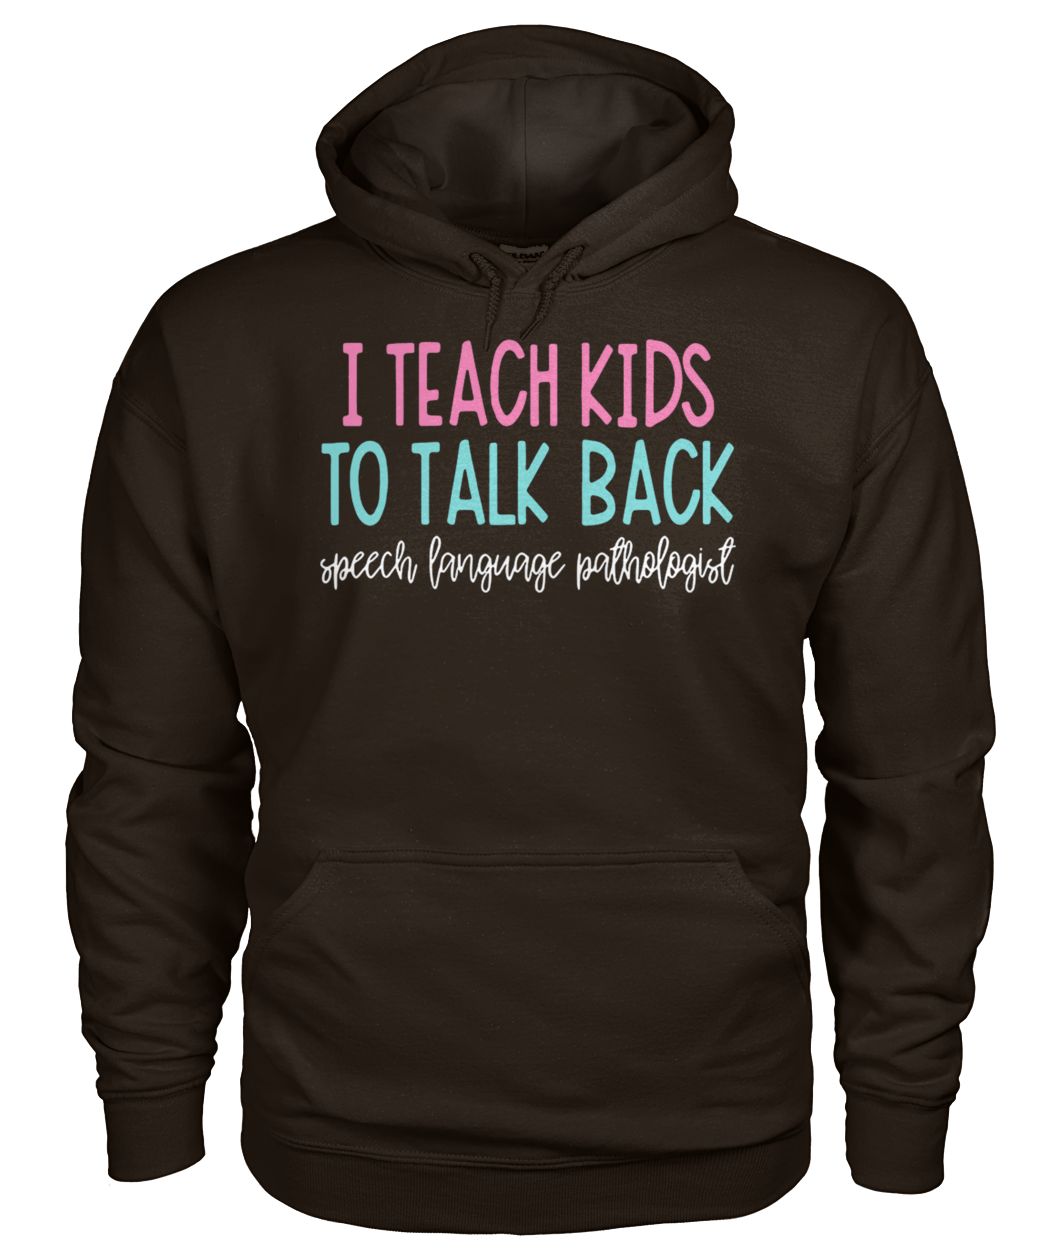 I teach kids to talk back speech language pathologist gildan hoodie